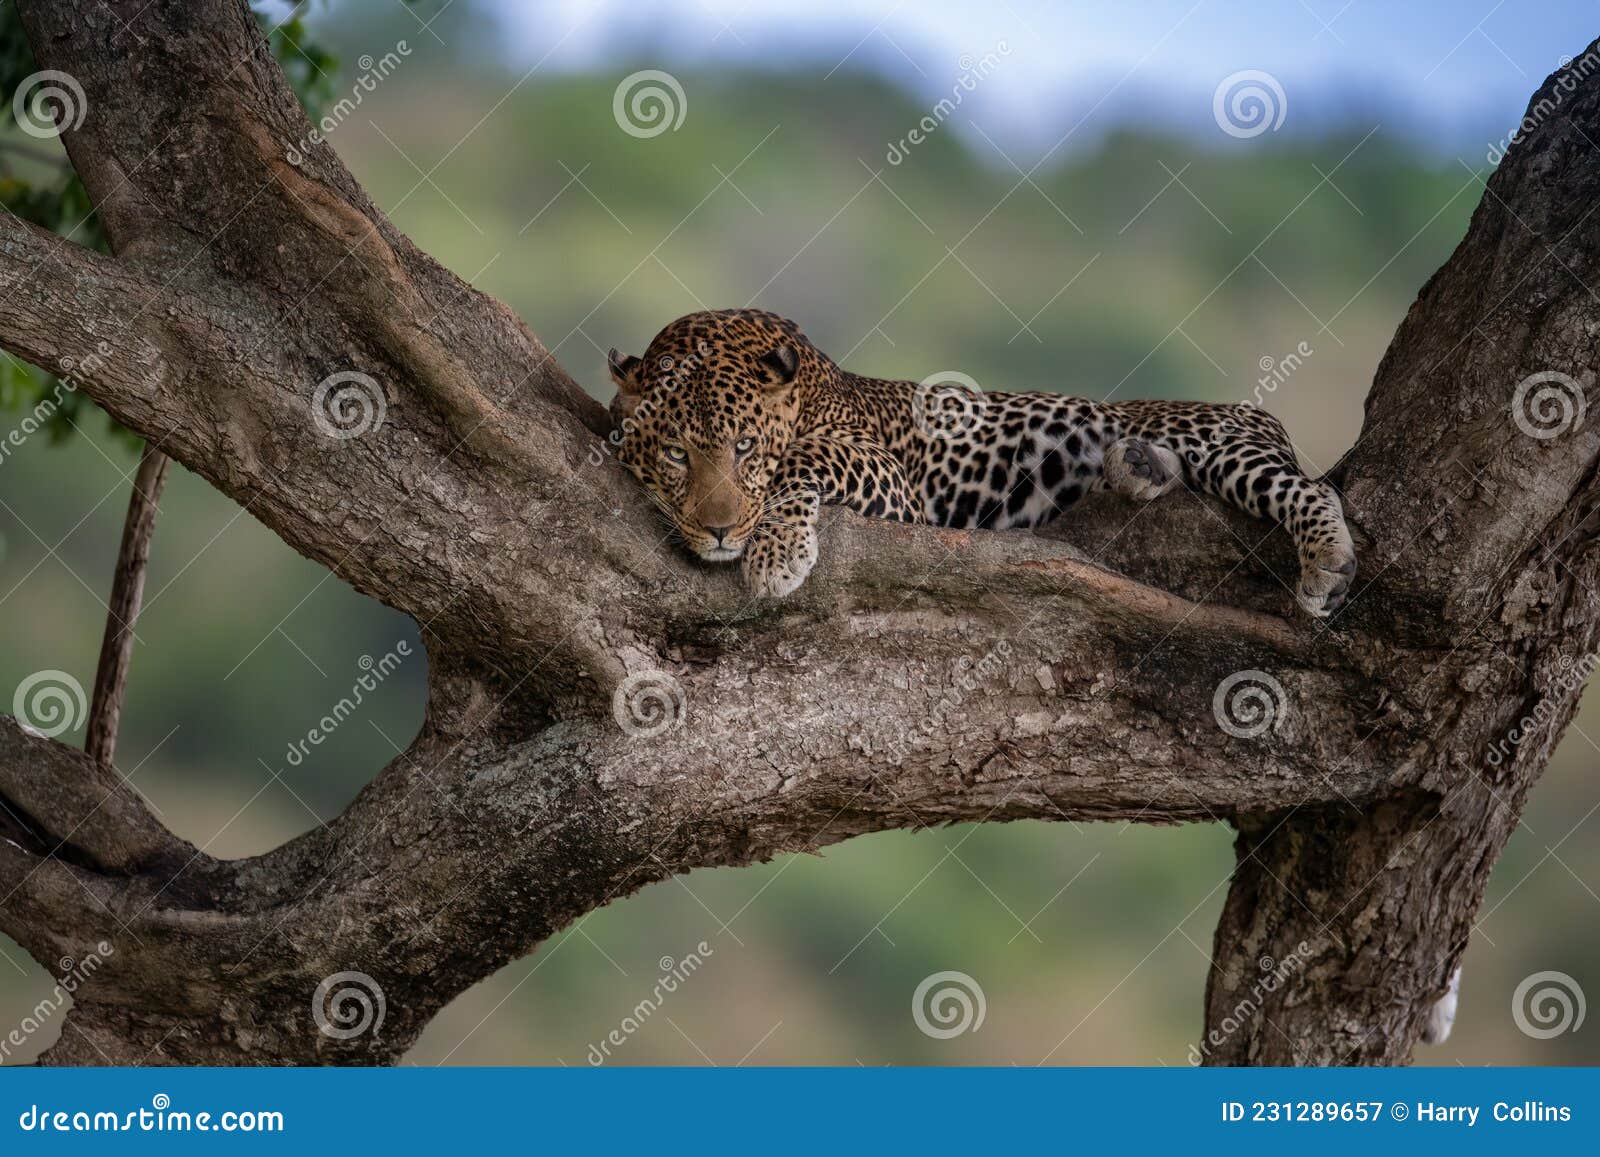 A Leopard in Kenya, Africa stock image. Image of safari - 231289657